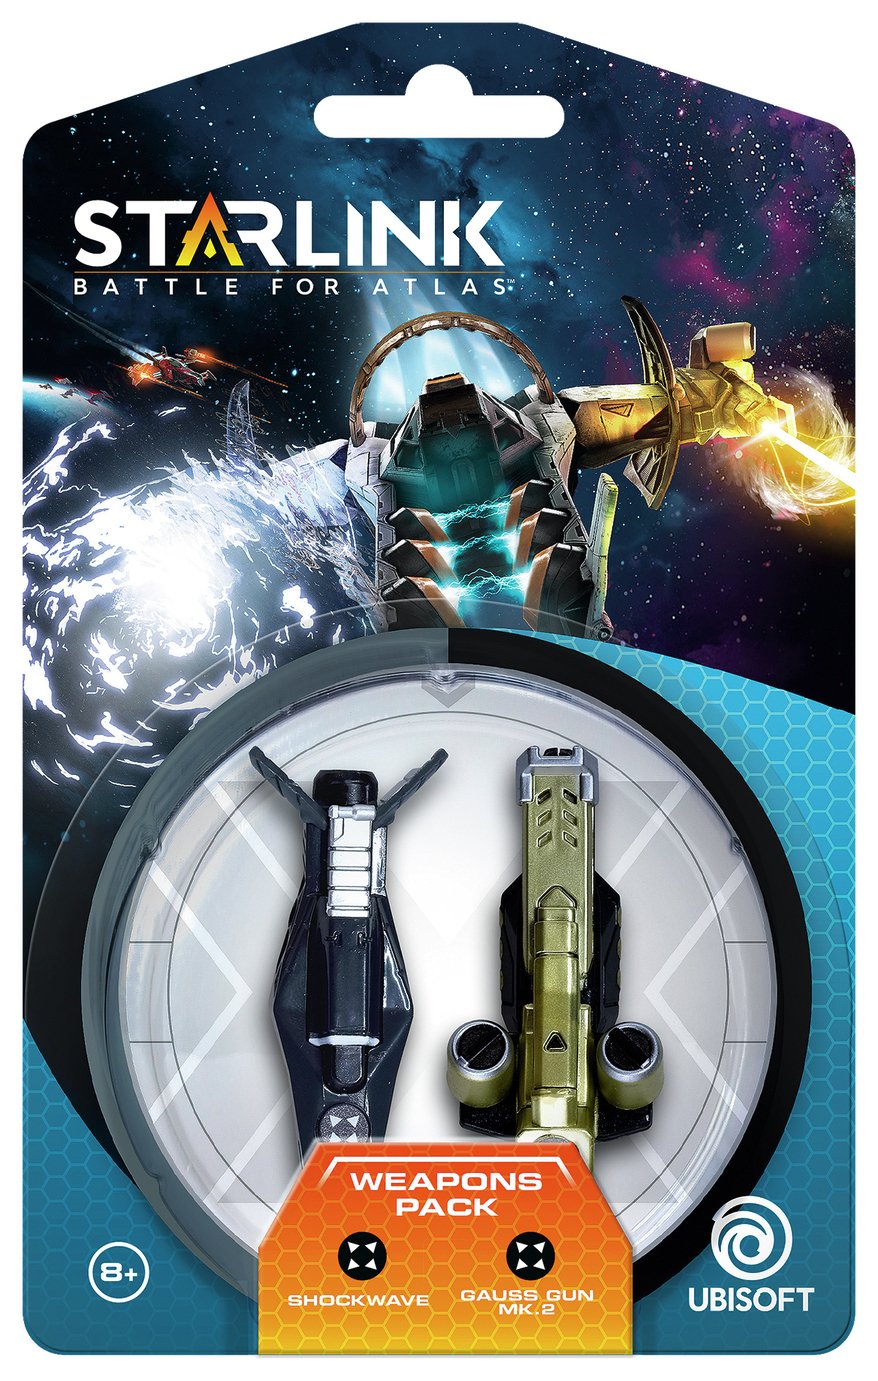 Starlink: Battle For Atlas Weapon Pack-Shockwave & Gauss Gun review